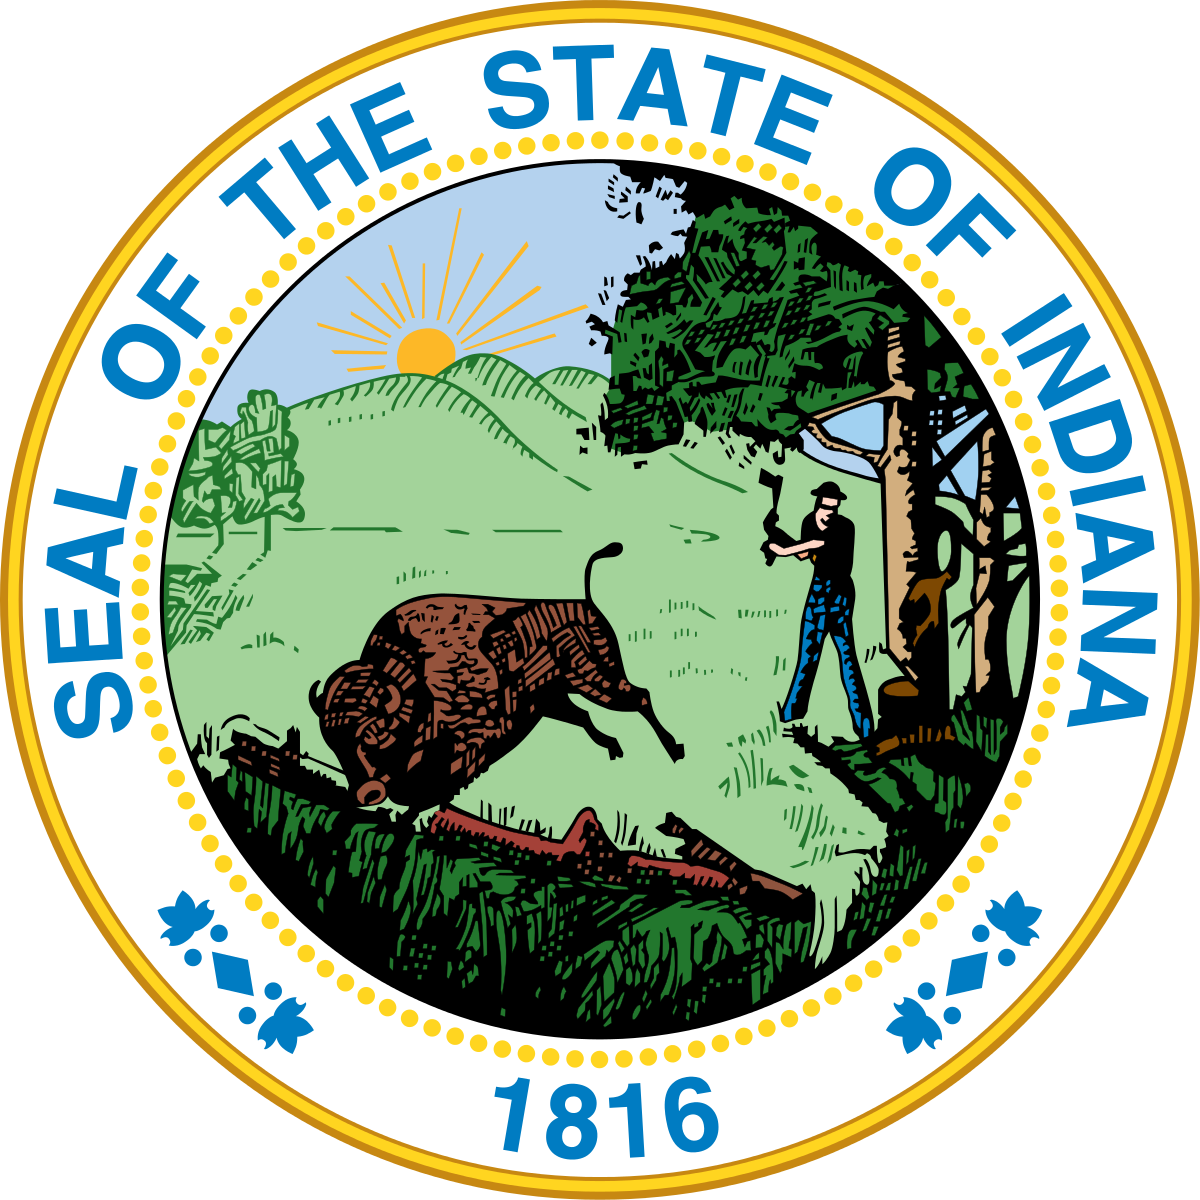 Indiana Seal.